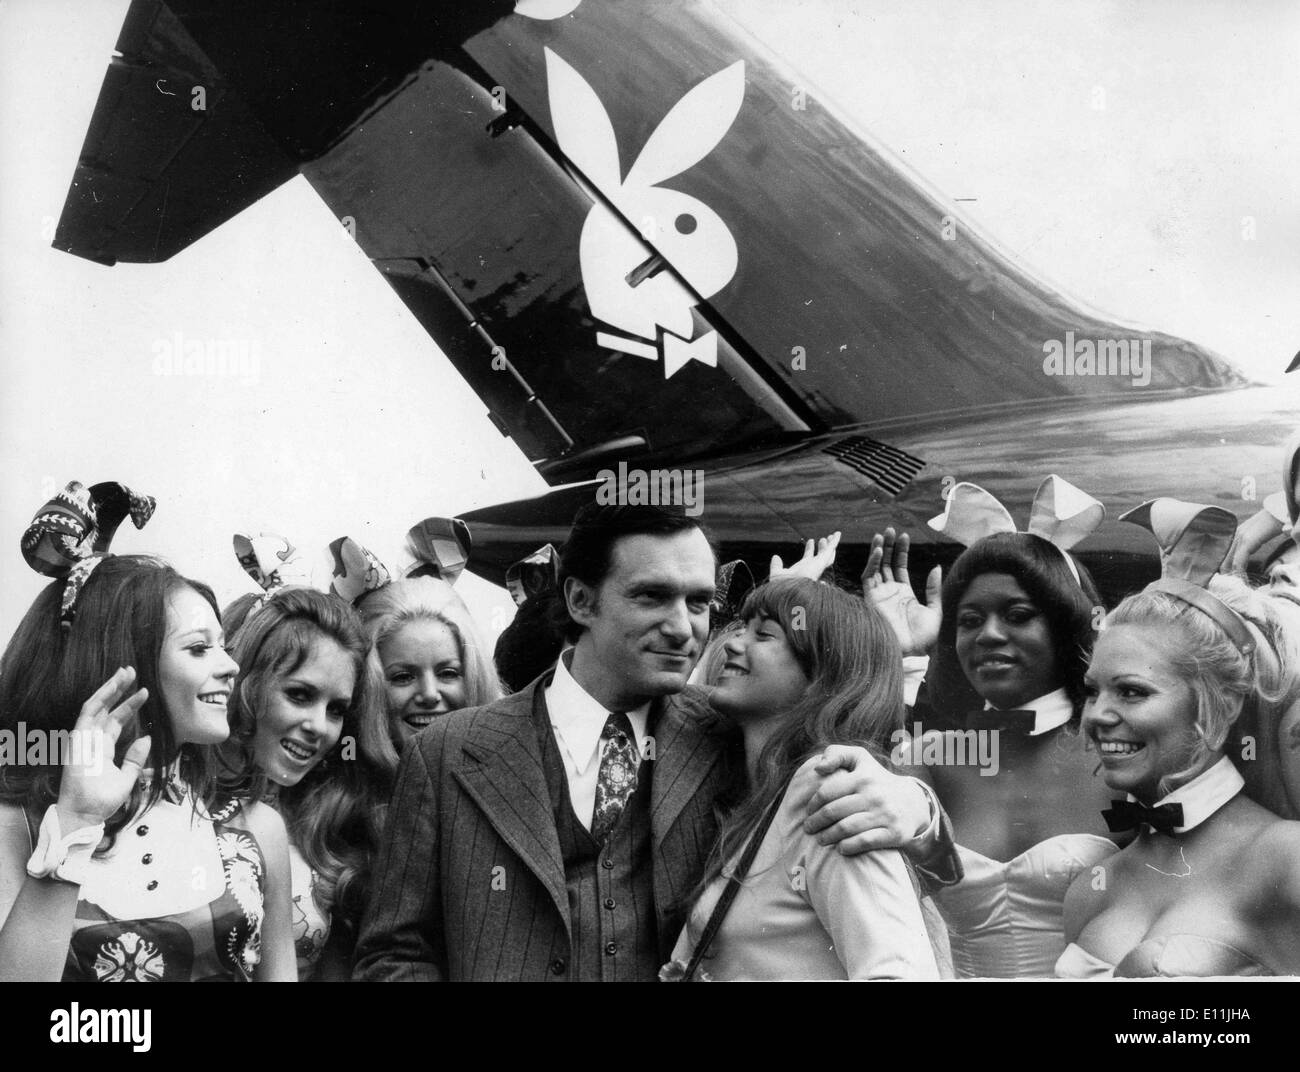 Hugh Hefner and Barbi Benton with private jet Stock Photo - Alamy